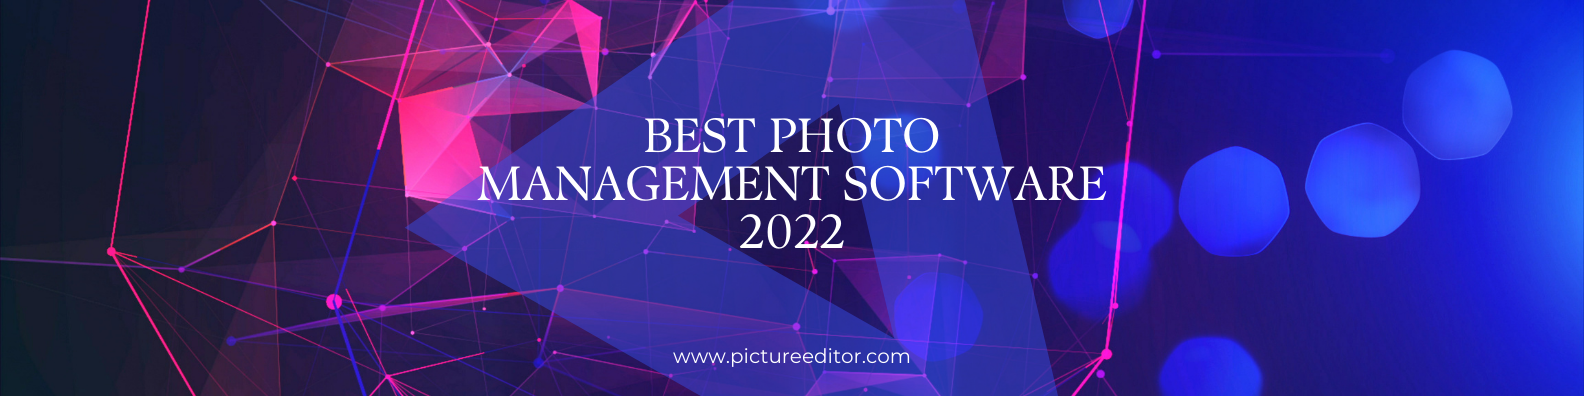 Best Photo Management Software 2022